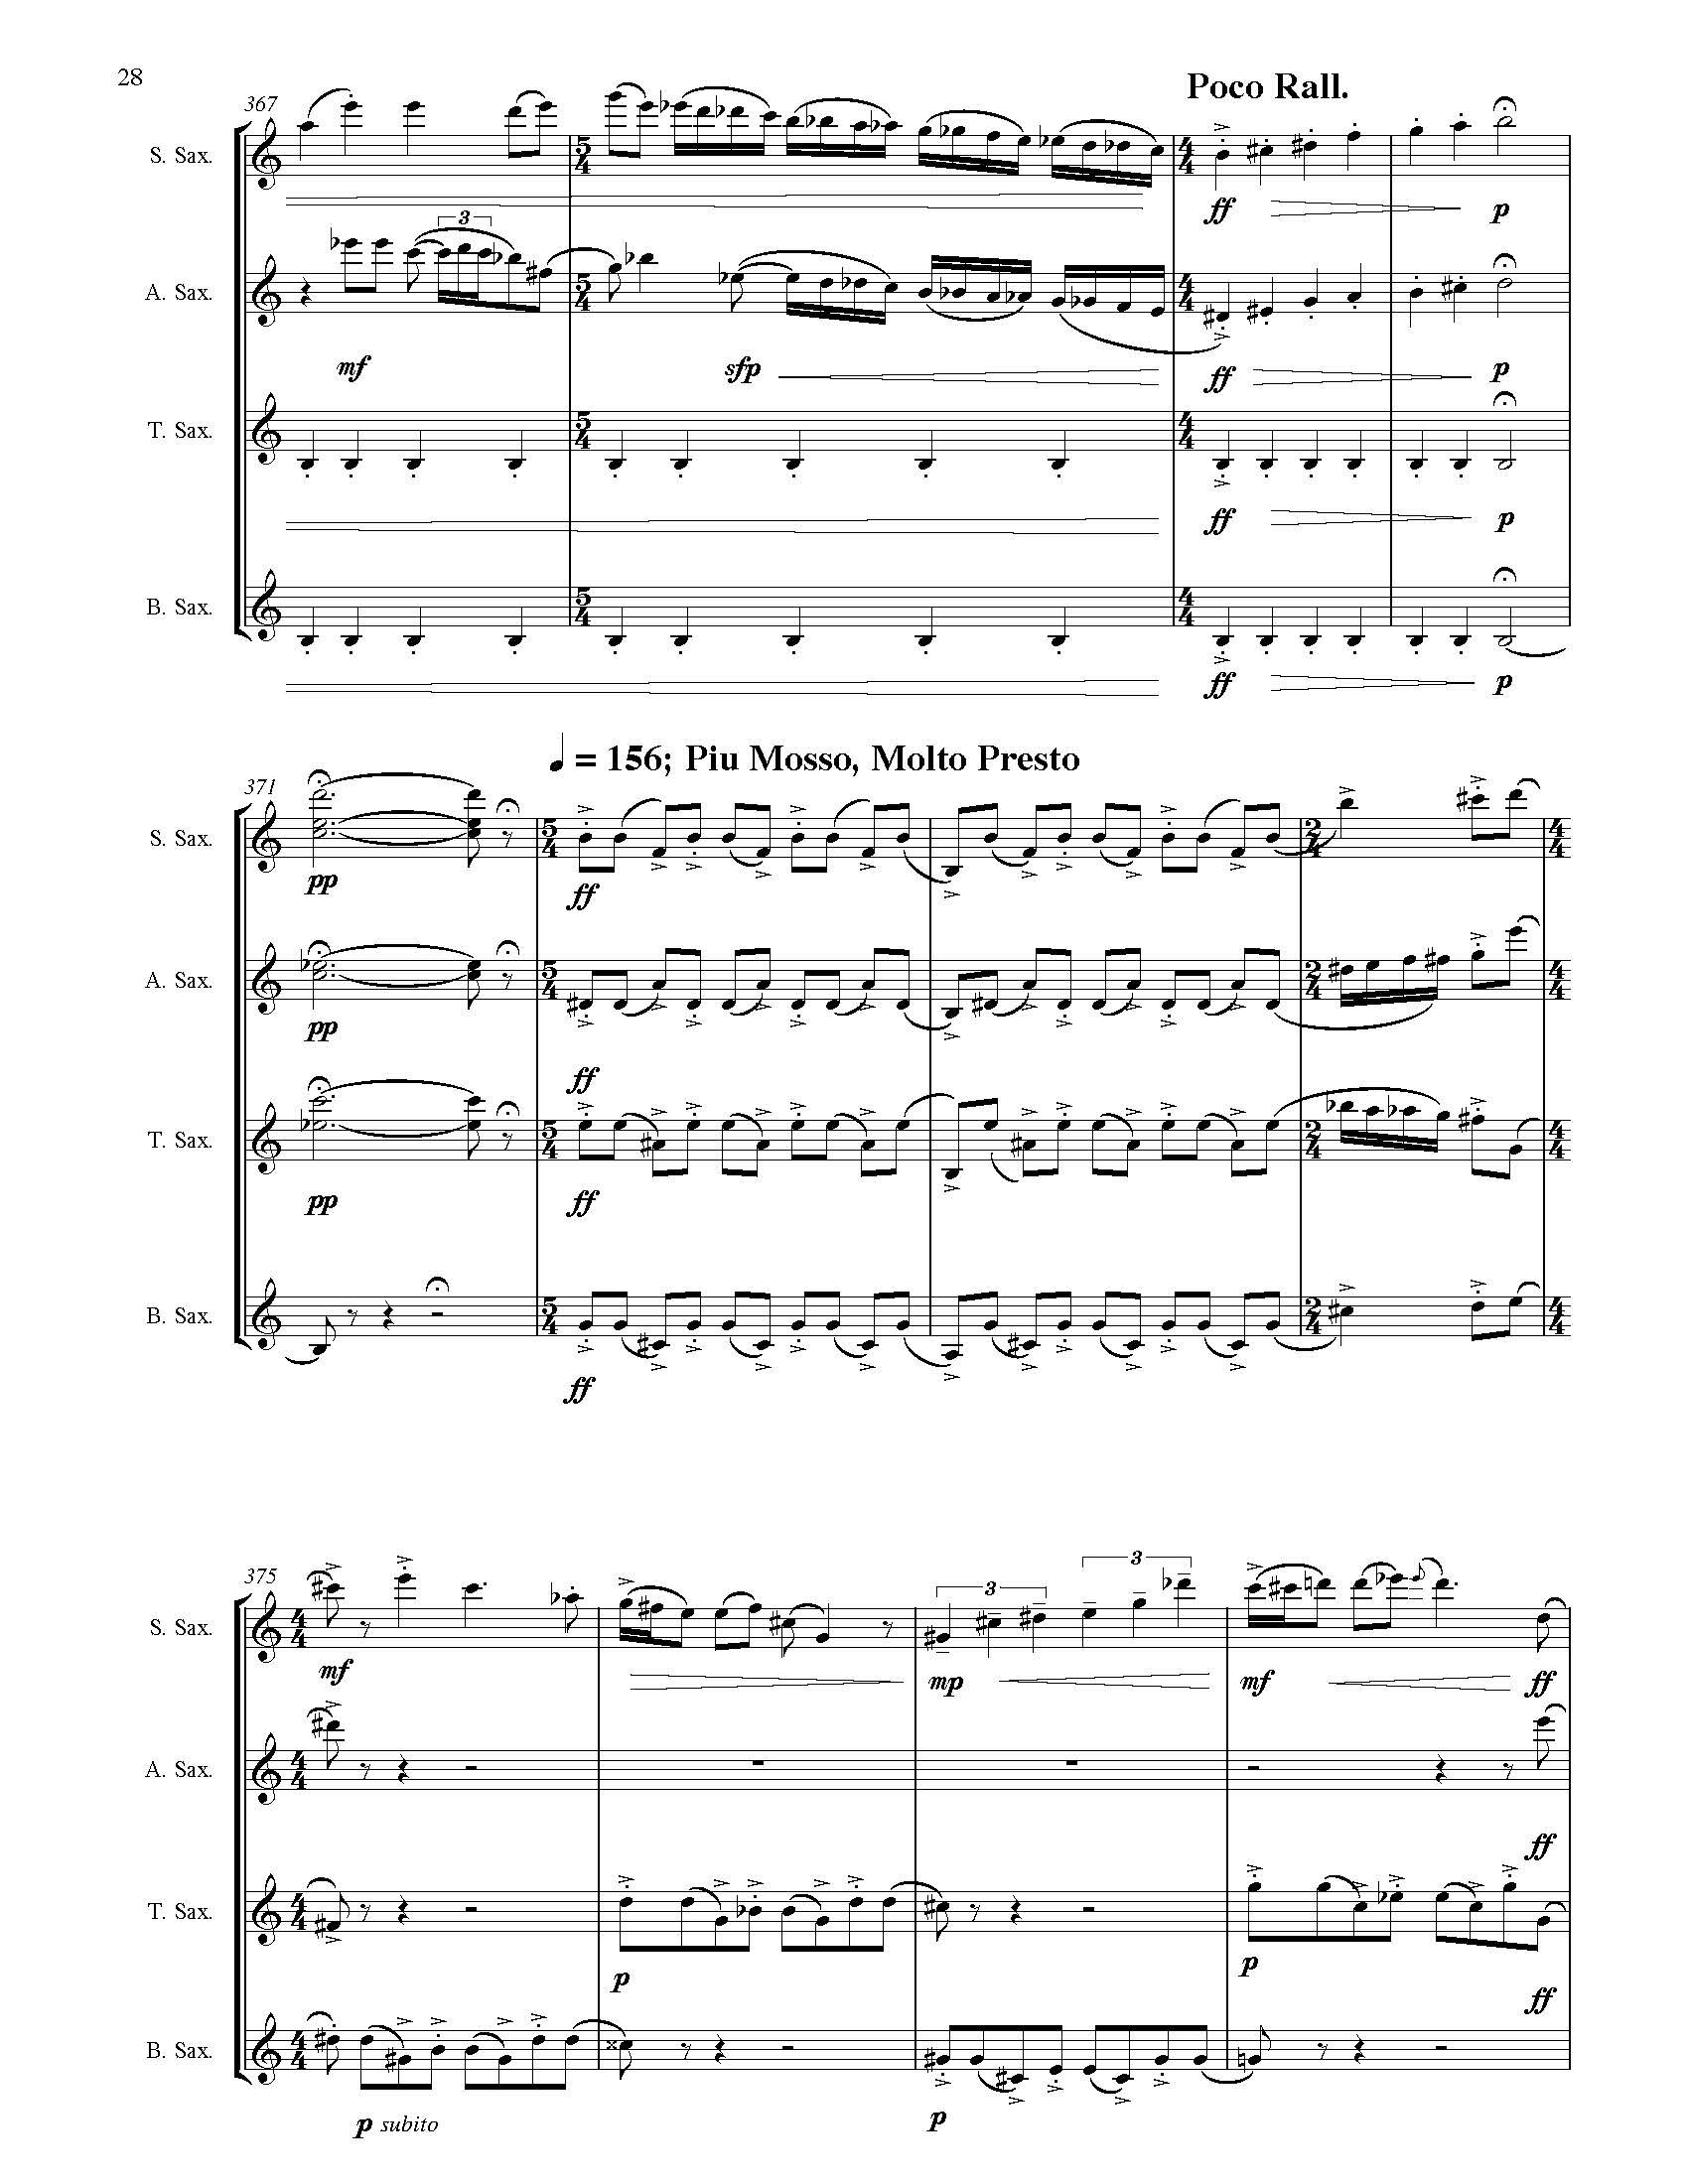 The Revivalist - Complete Score_Page_36.jpg